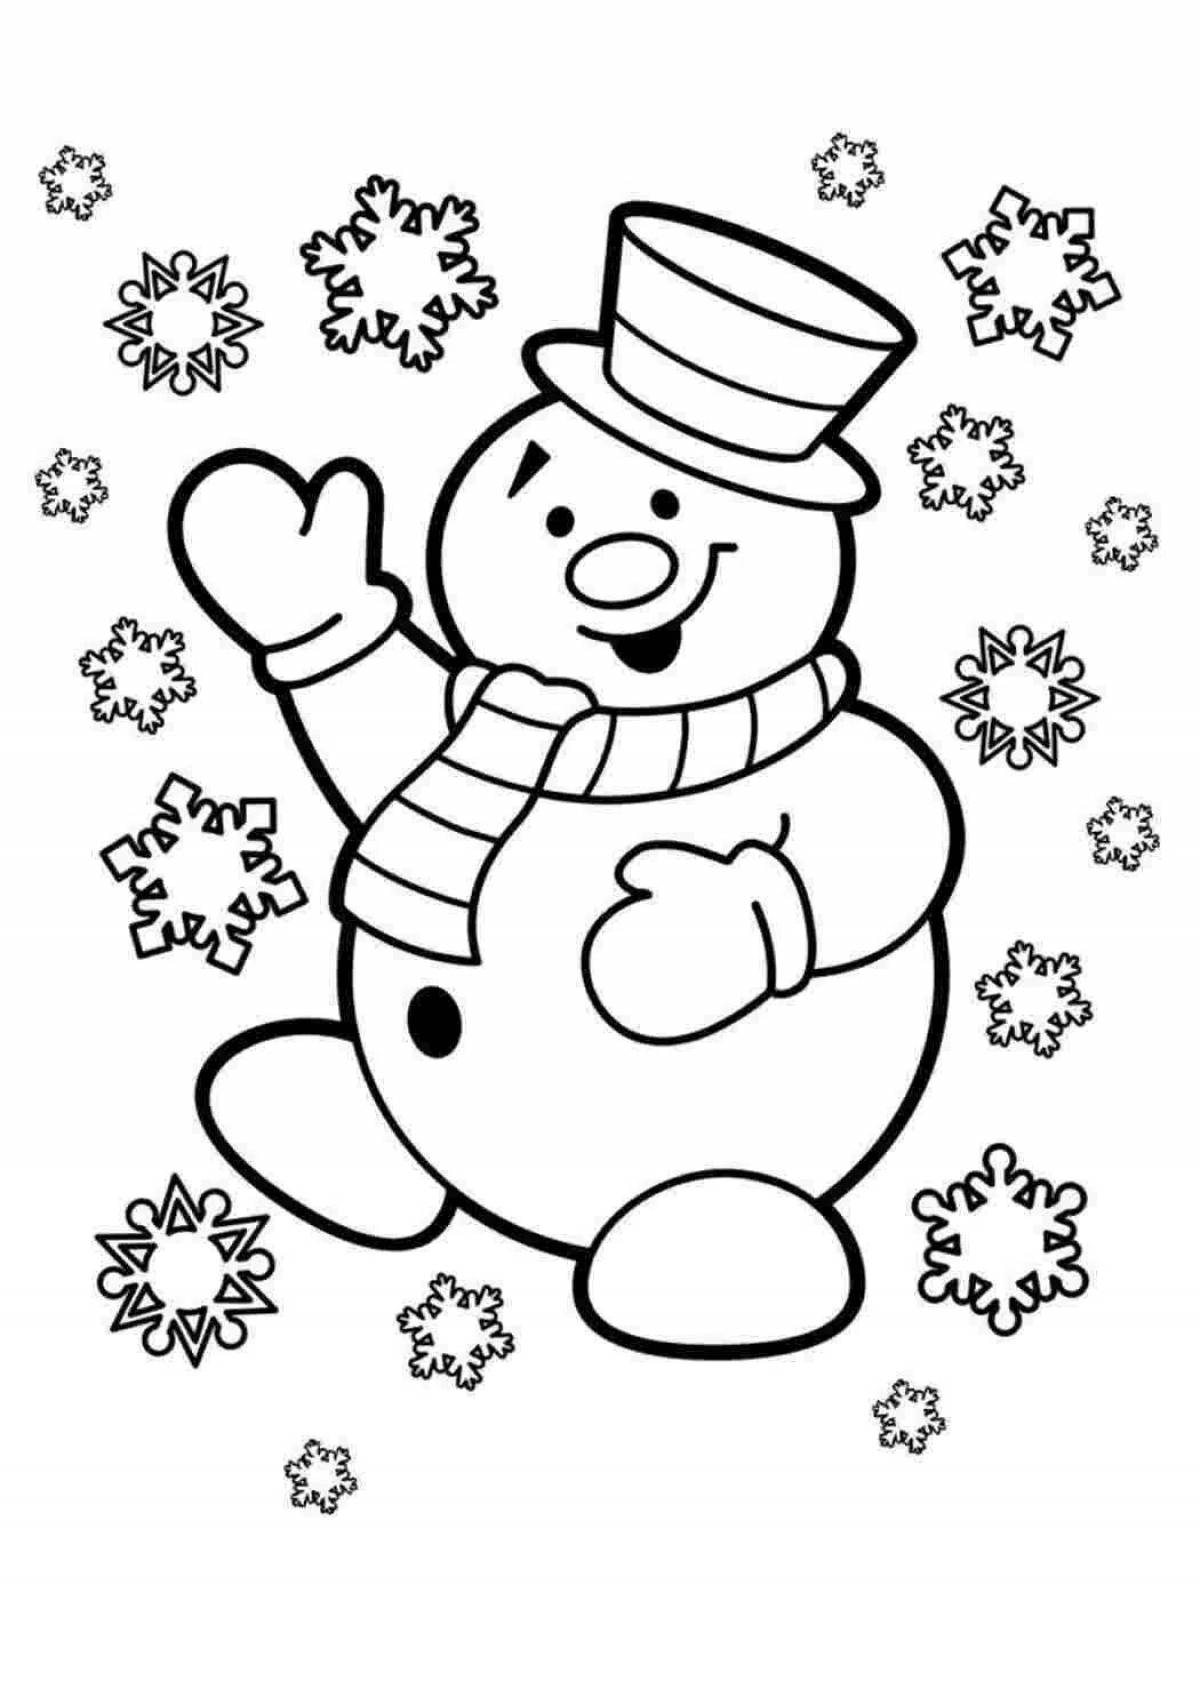 Smiling cute snowman coloring book